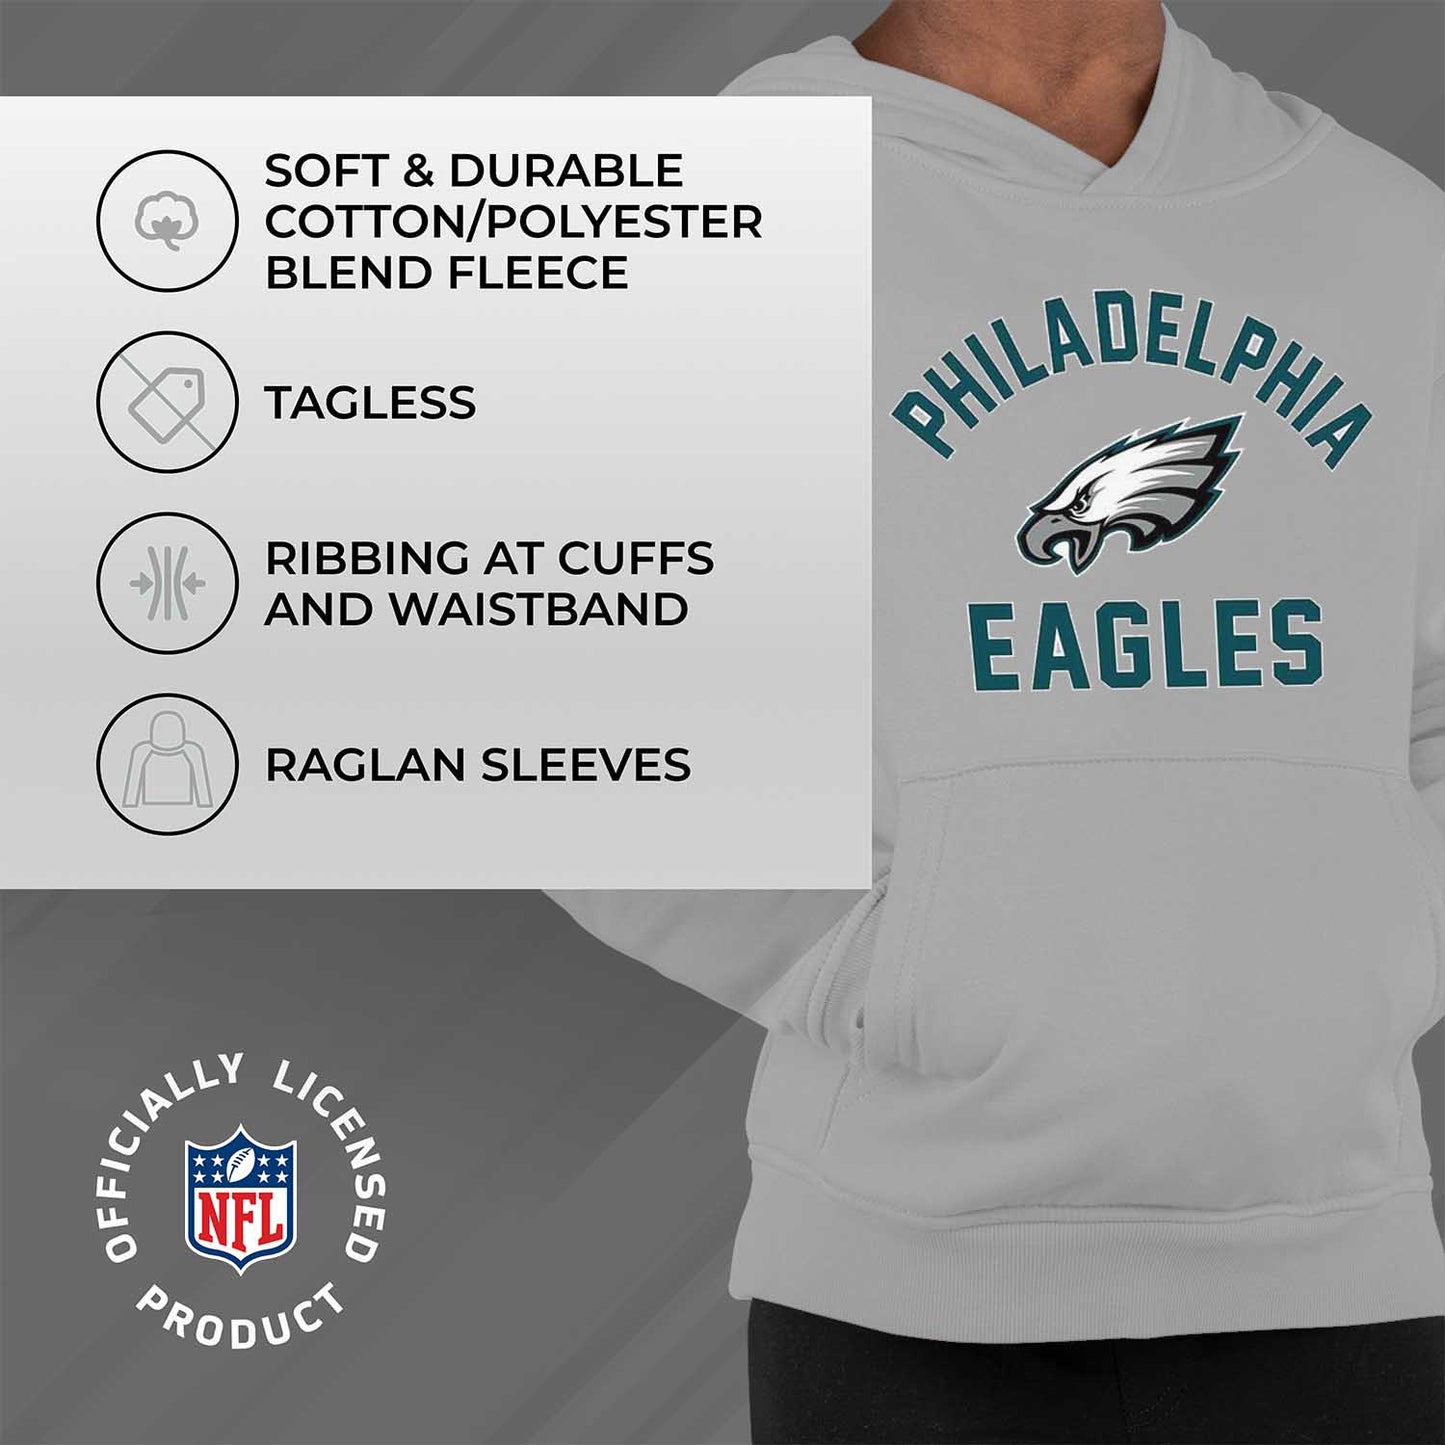 Philadelphia Eagles NFL Youth Gameday Hooded Sweatshirt - Gray